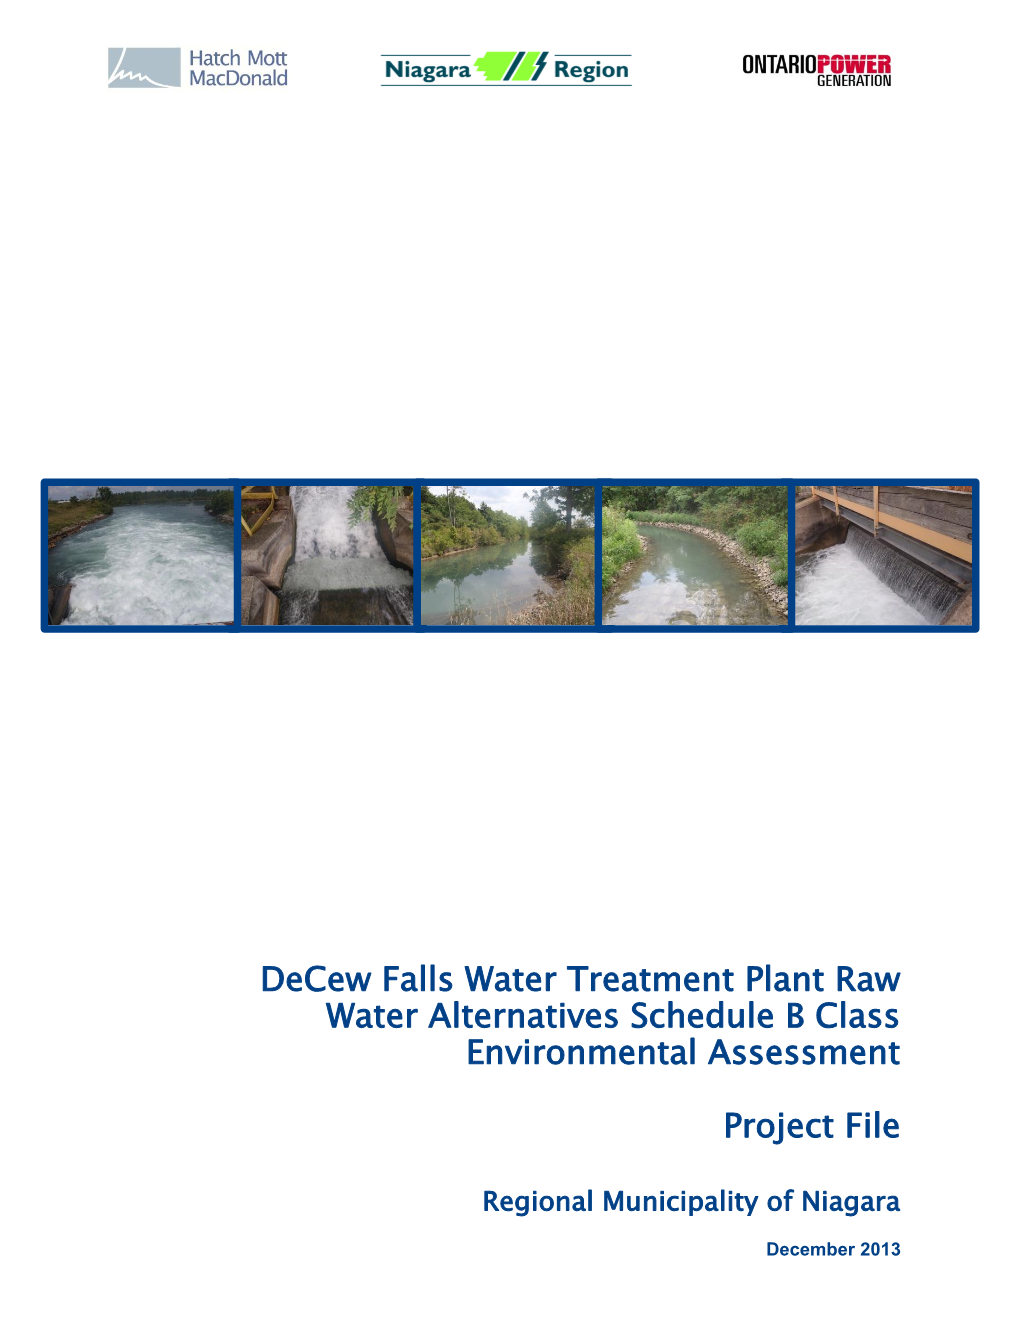 Decew Falls Water Treatment Plant Raw Water Alternatives EA Project